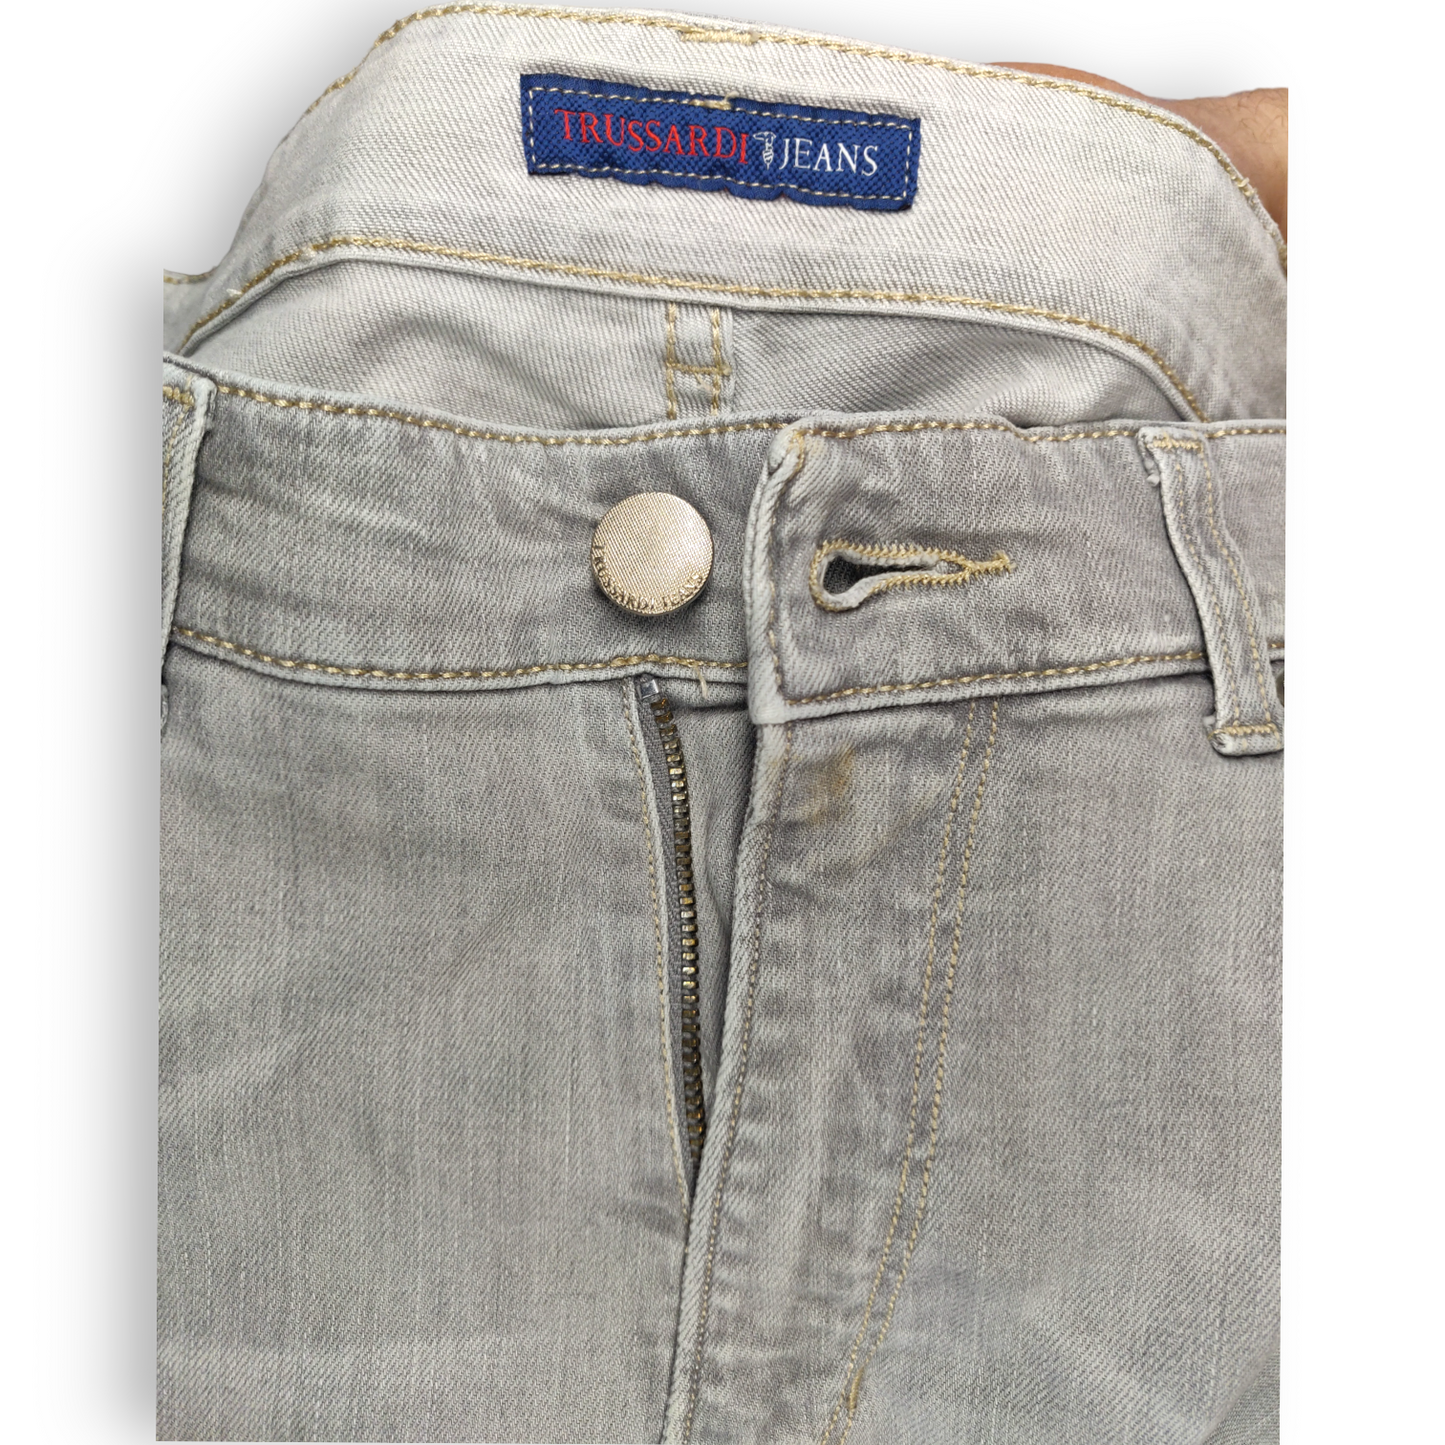 Trussardi Jeans Grey Straight Fit Stretch Jeans Men Size W32/L29